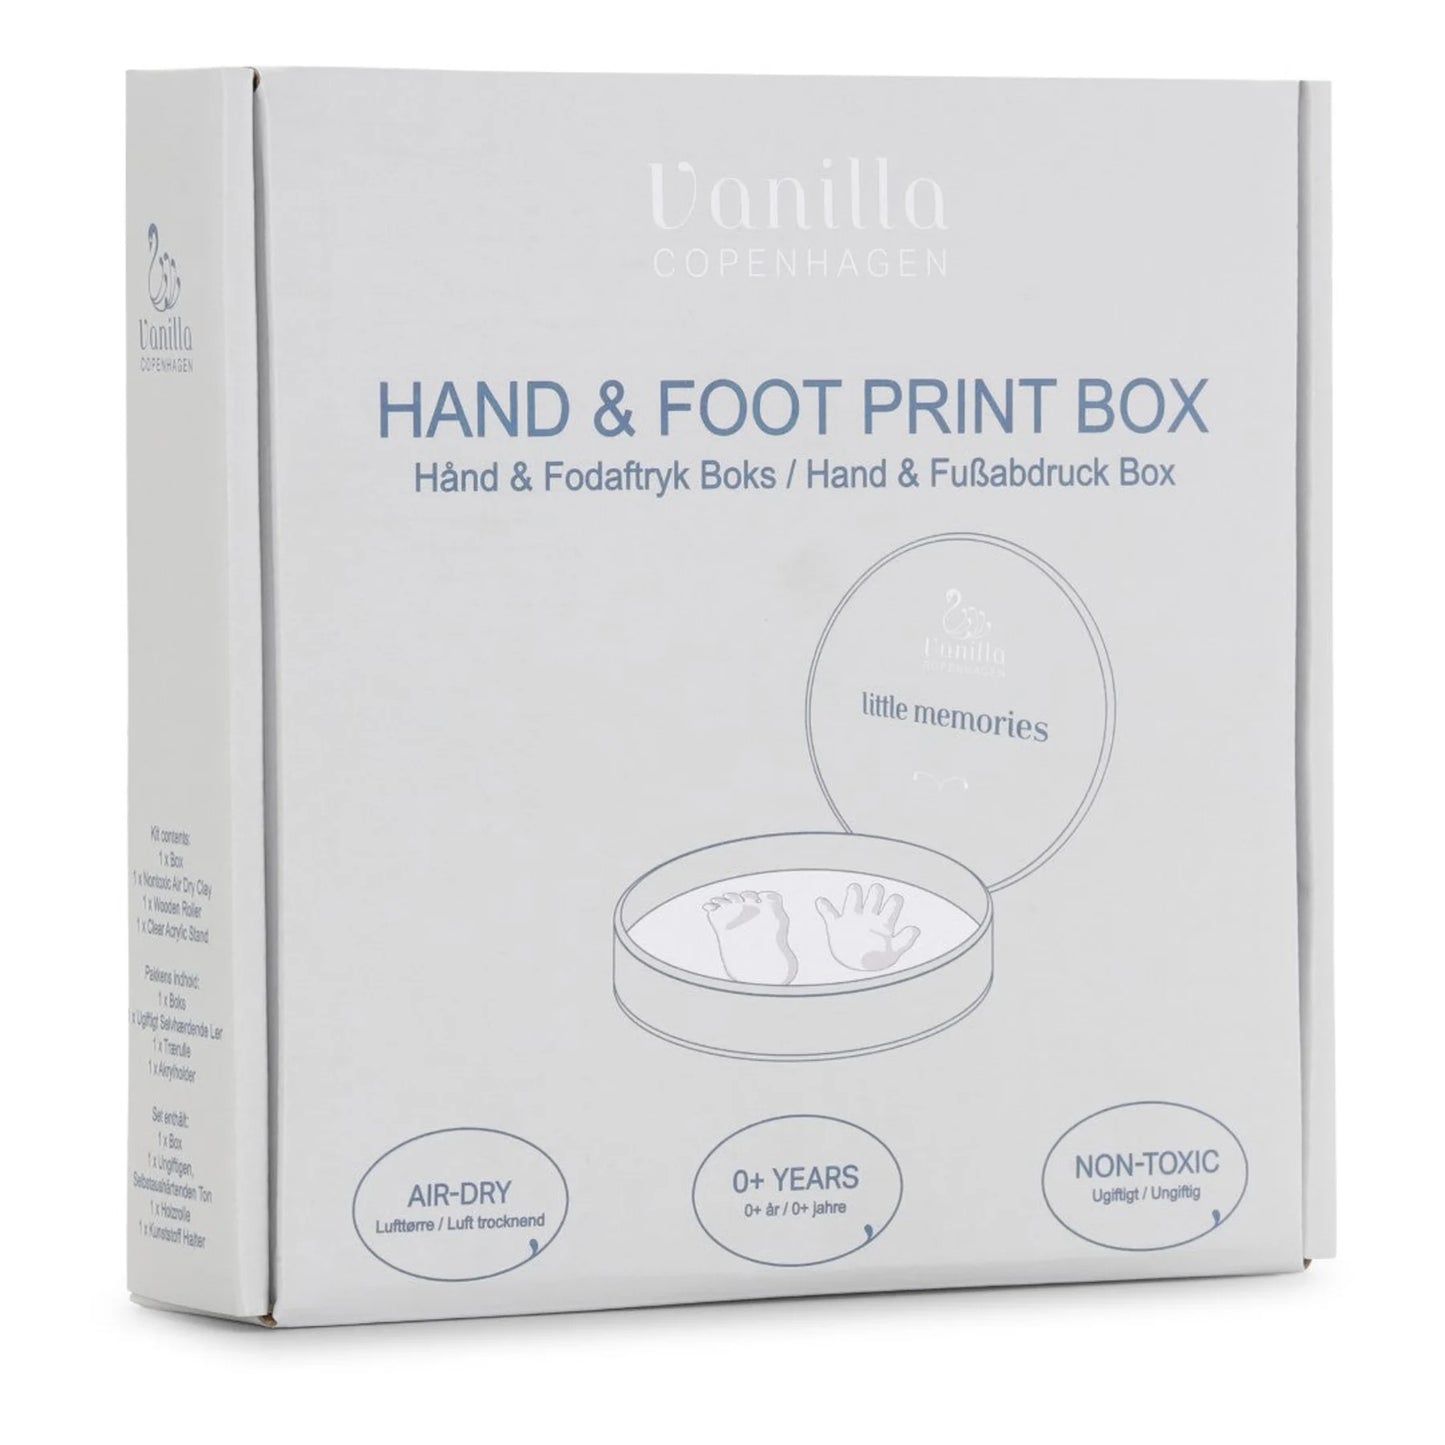 Hand & Foot Print Box